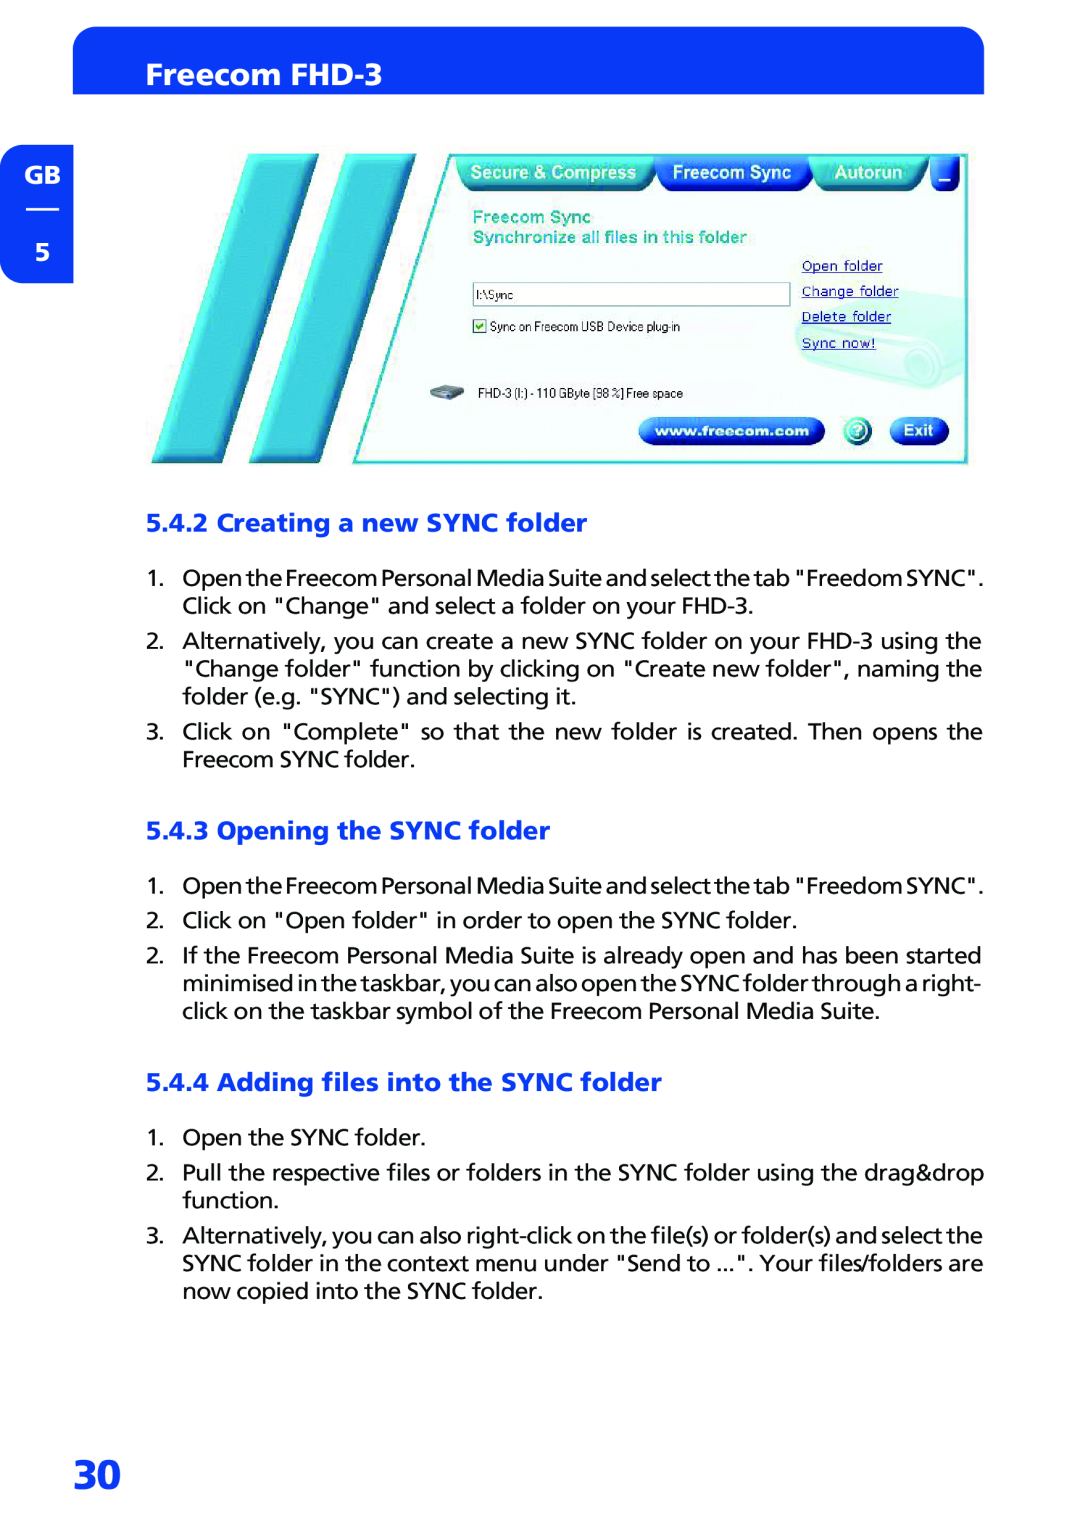 Freecom Technologies FHD-3 manual Creating a new SYNC folder, Opening the SYNC folder, Adding files into the SYNC folder 